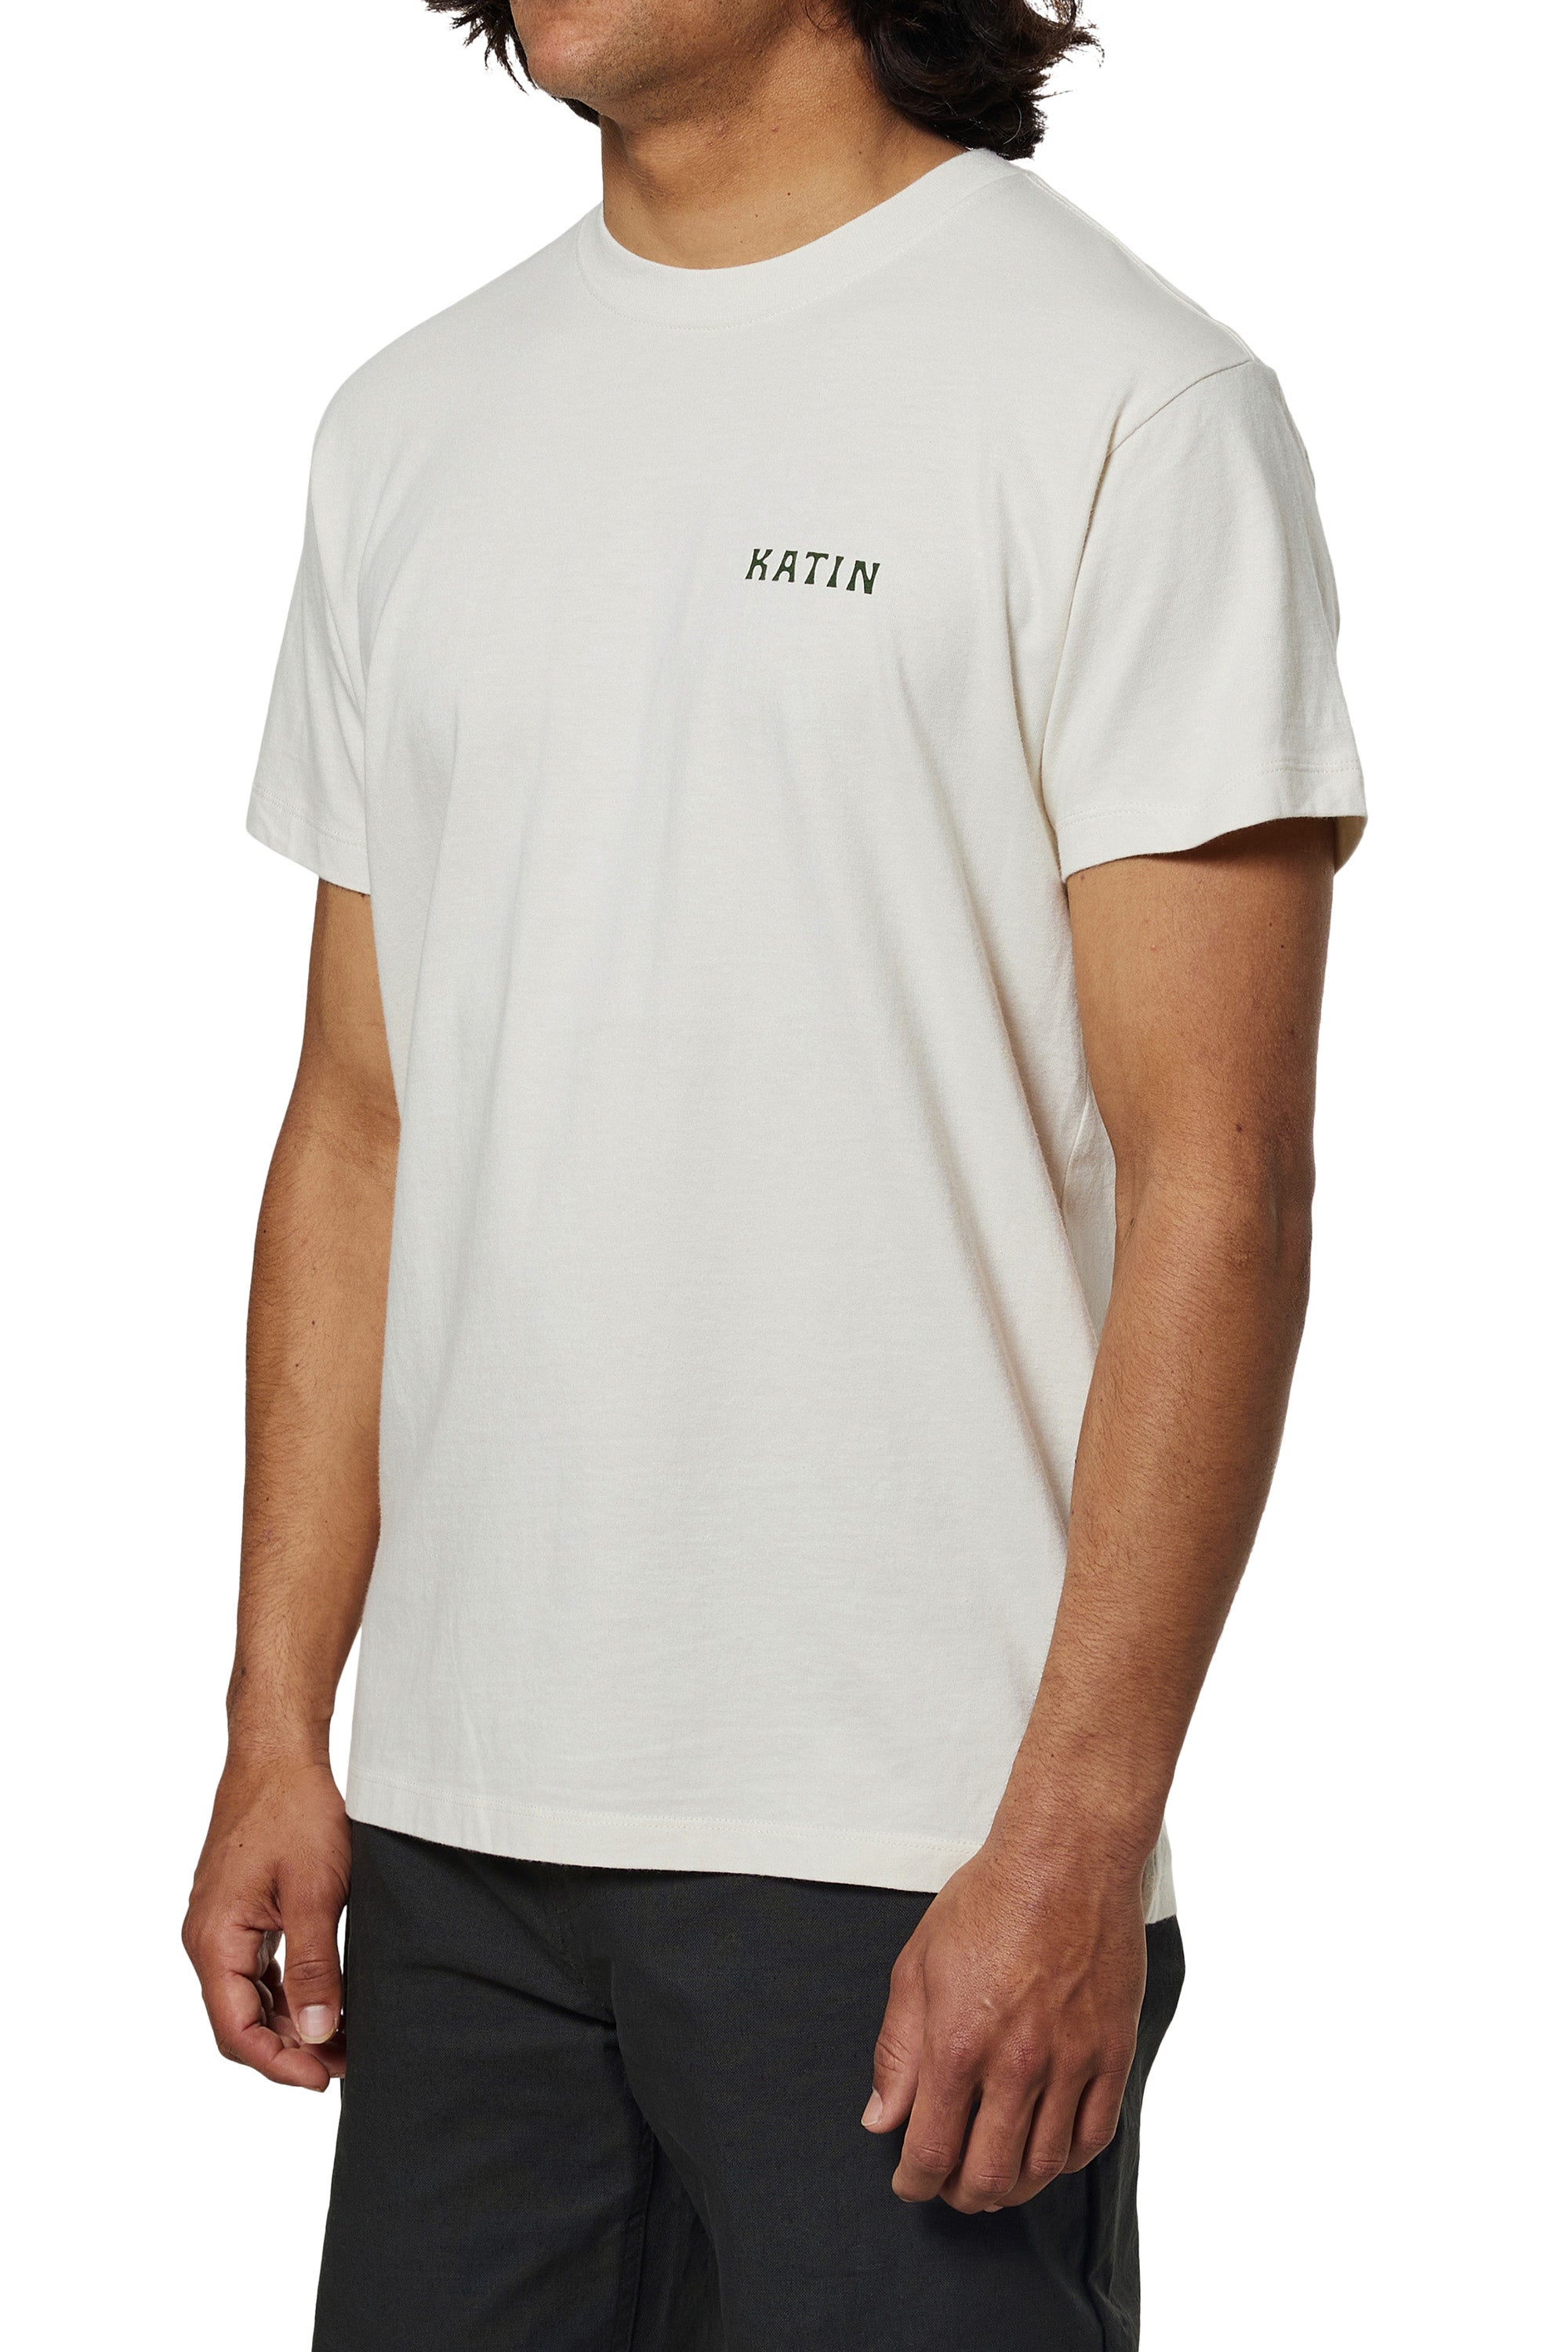 Vista T-shirt | Katin USA